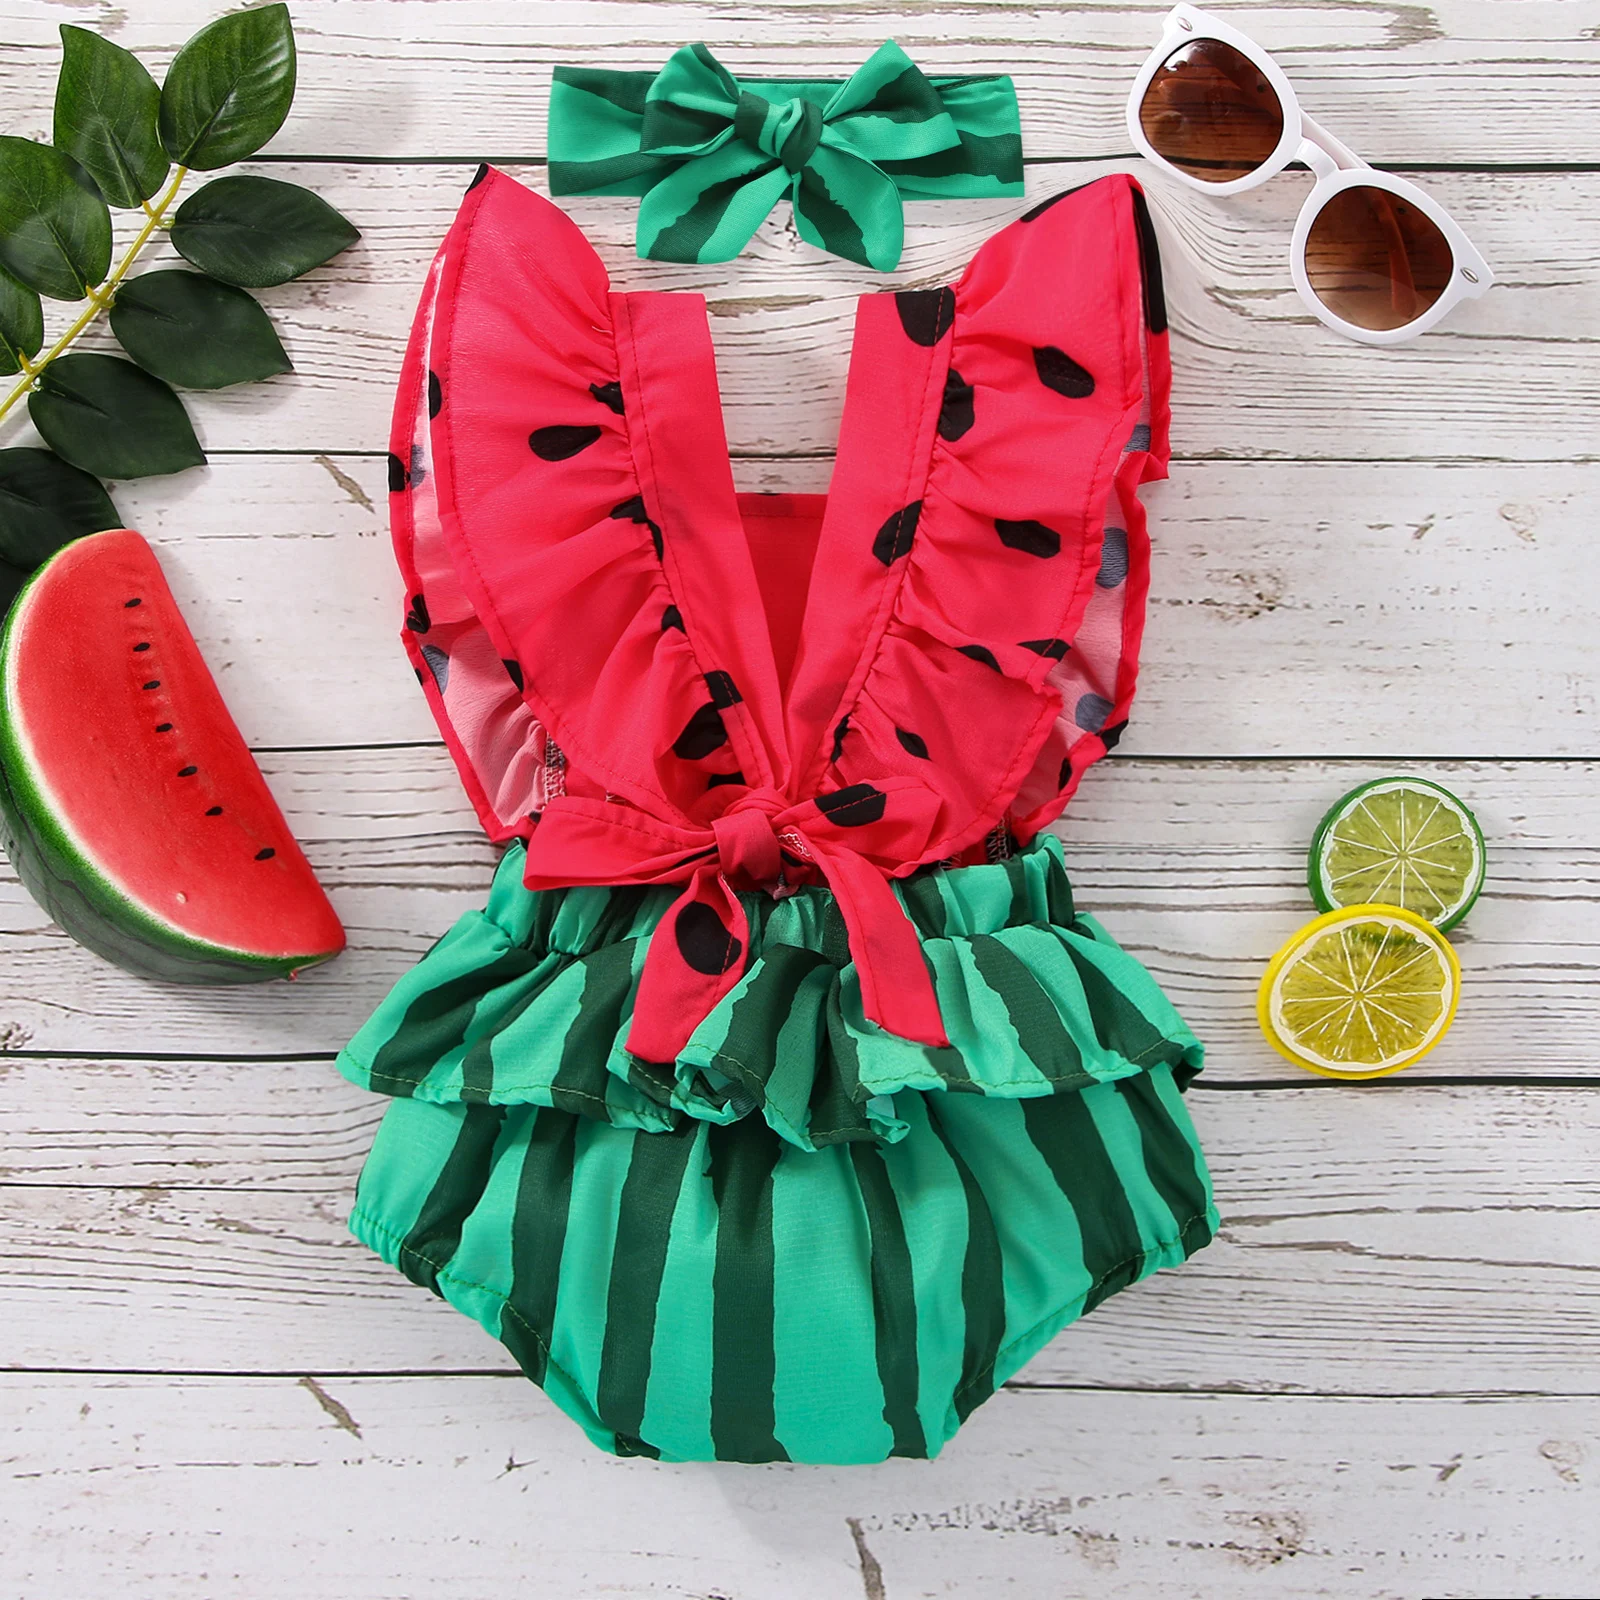 ma&baby 0-24M Newborn Infant Baby Girls Romper Cute Watermelon Jumpsuit Playsuit Sunsuit Summer Clothing Overalls D01 best Baby Bodysuits